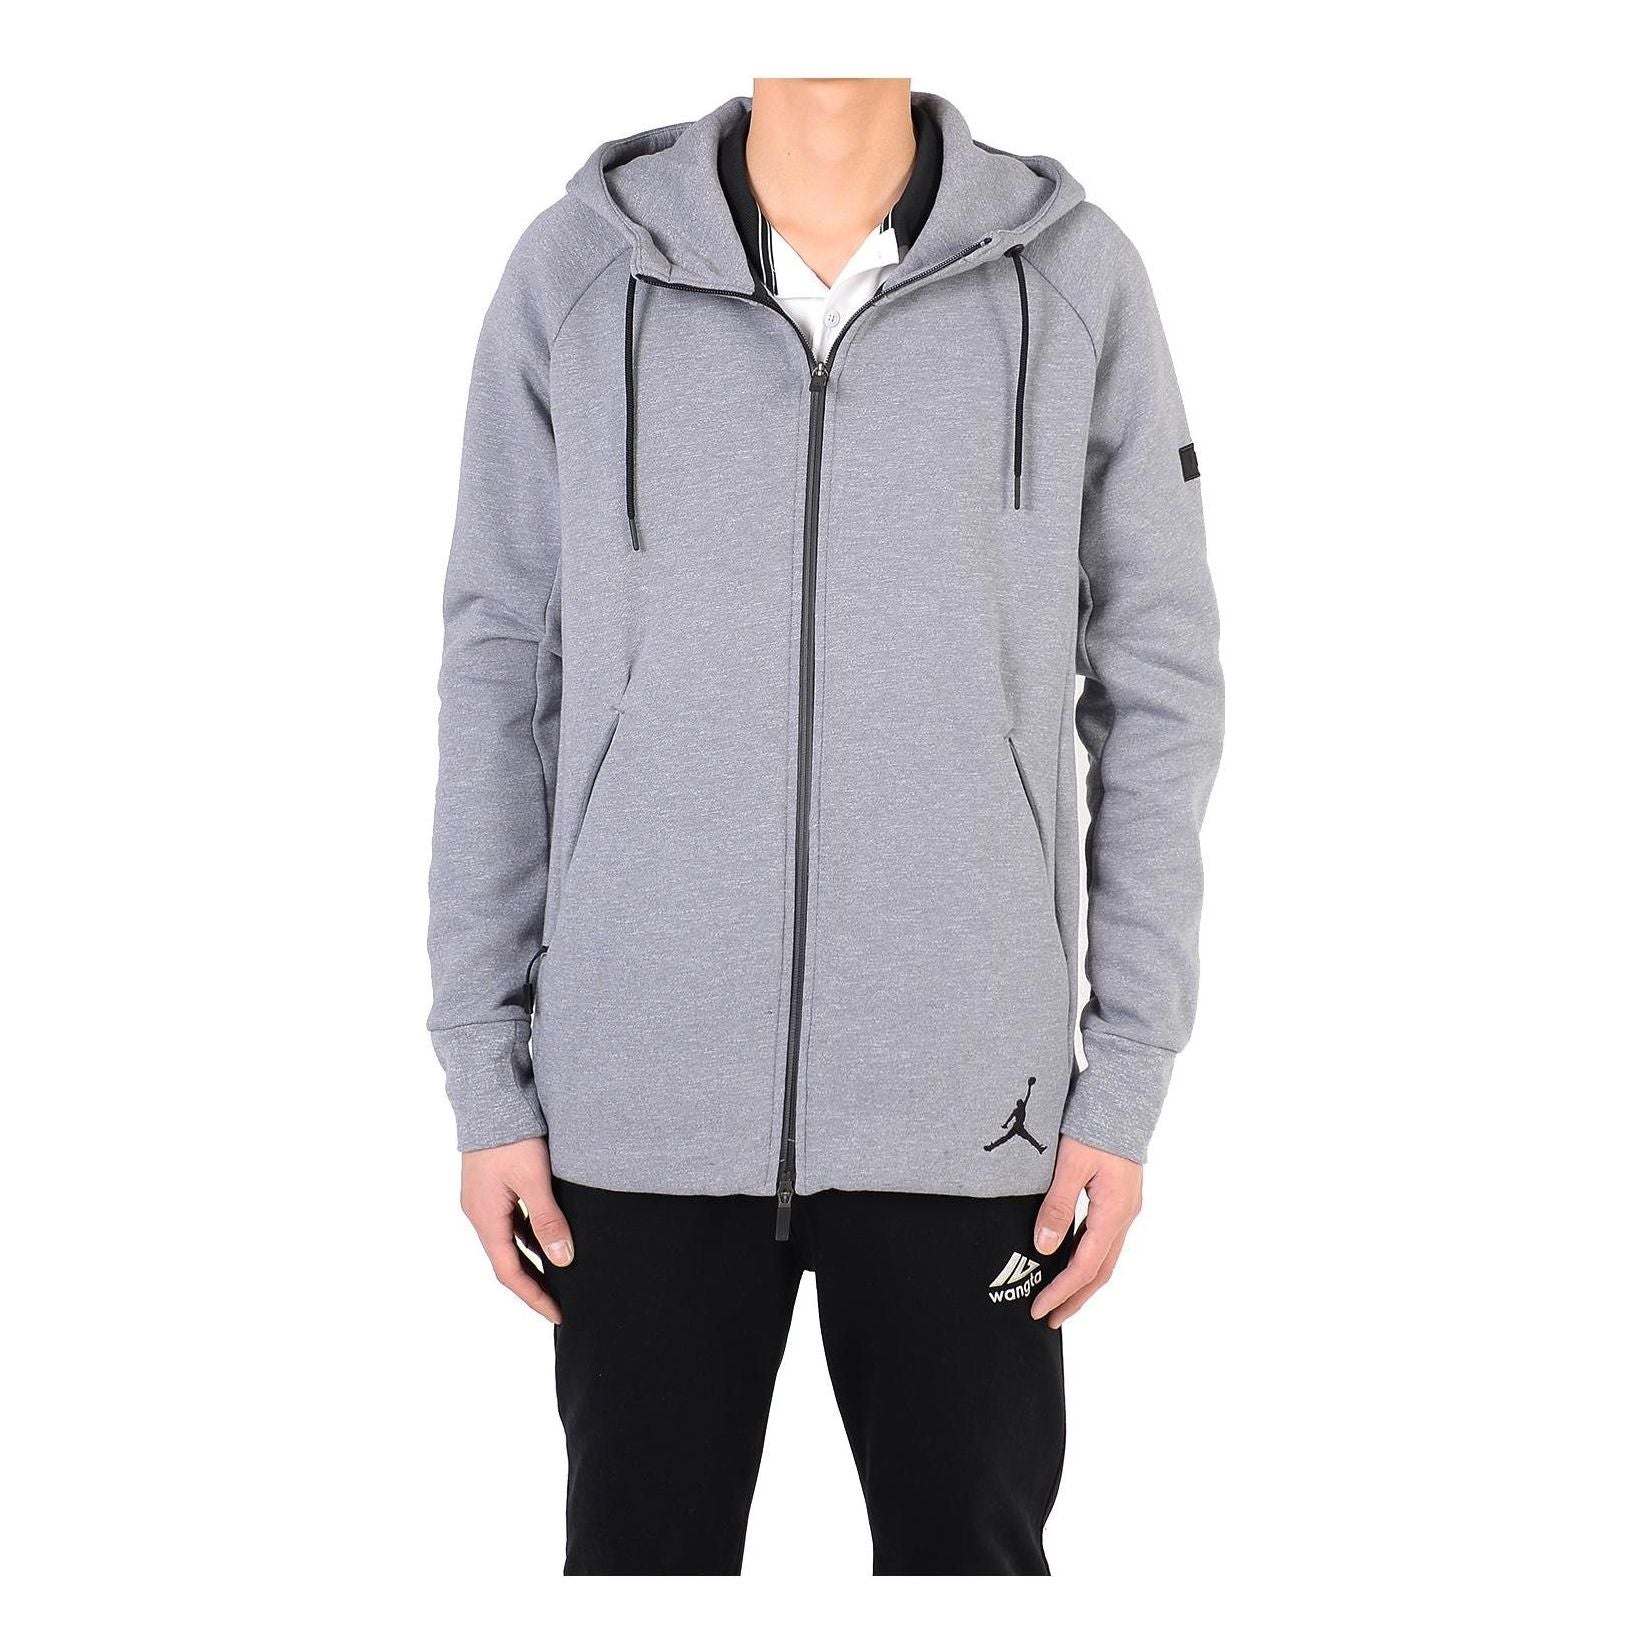 Men's Jordan Solid Color Printing Logo Zipper Drawstring Hooded Jacket Gray 'Cool Grey Balck' 809473 - 1